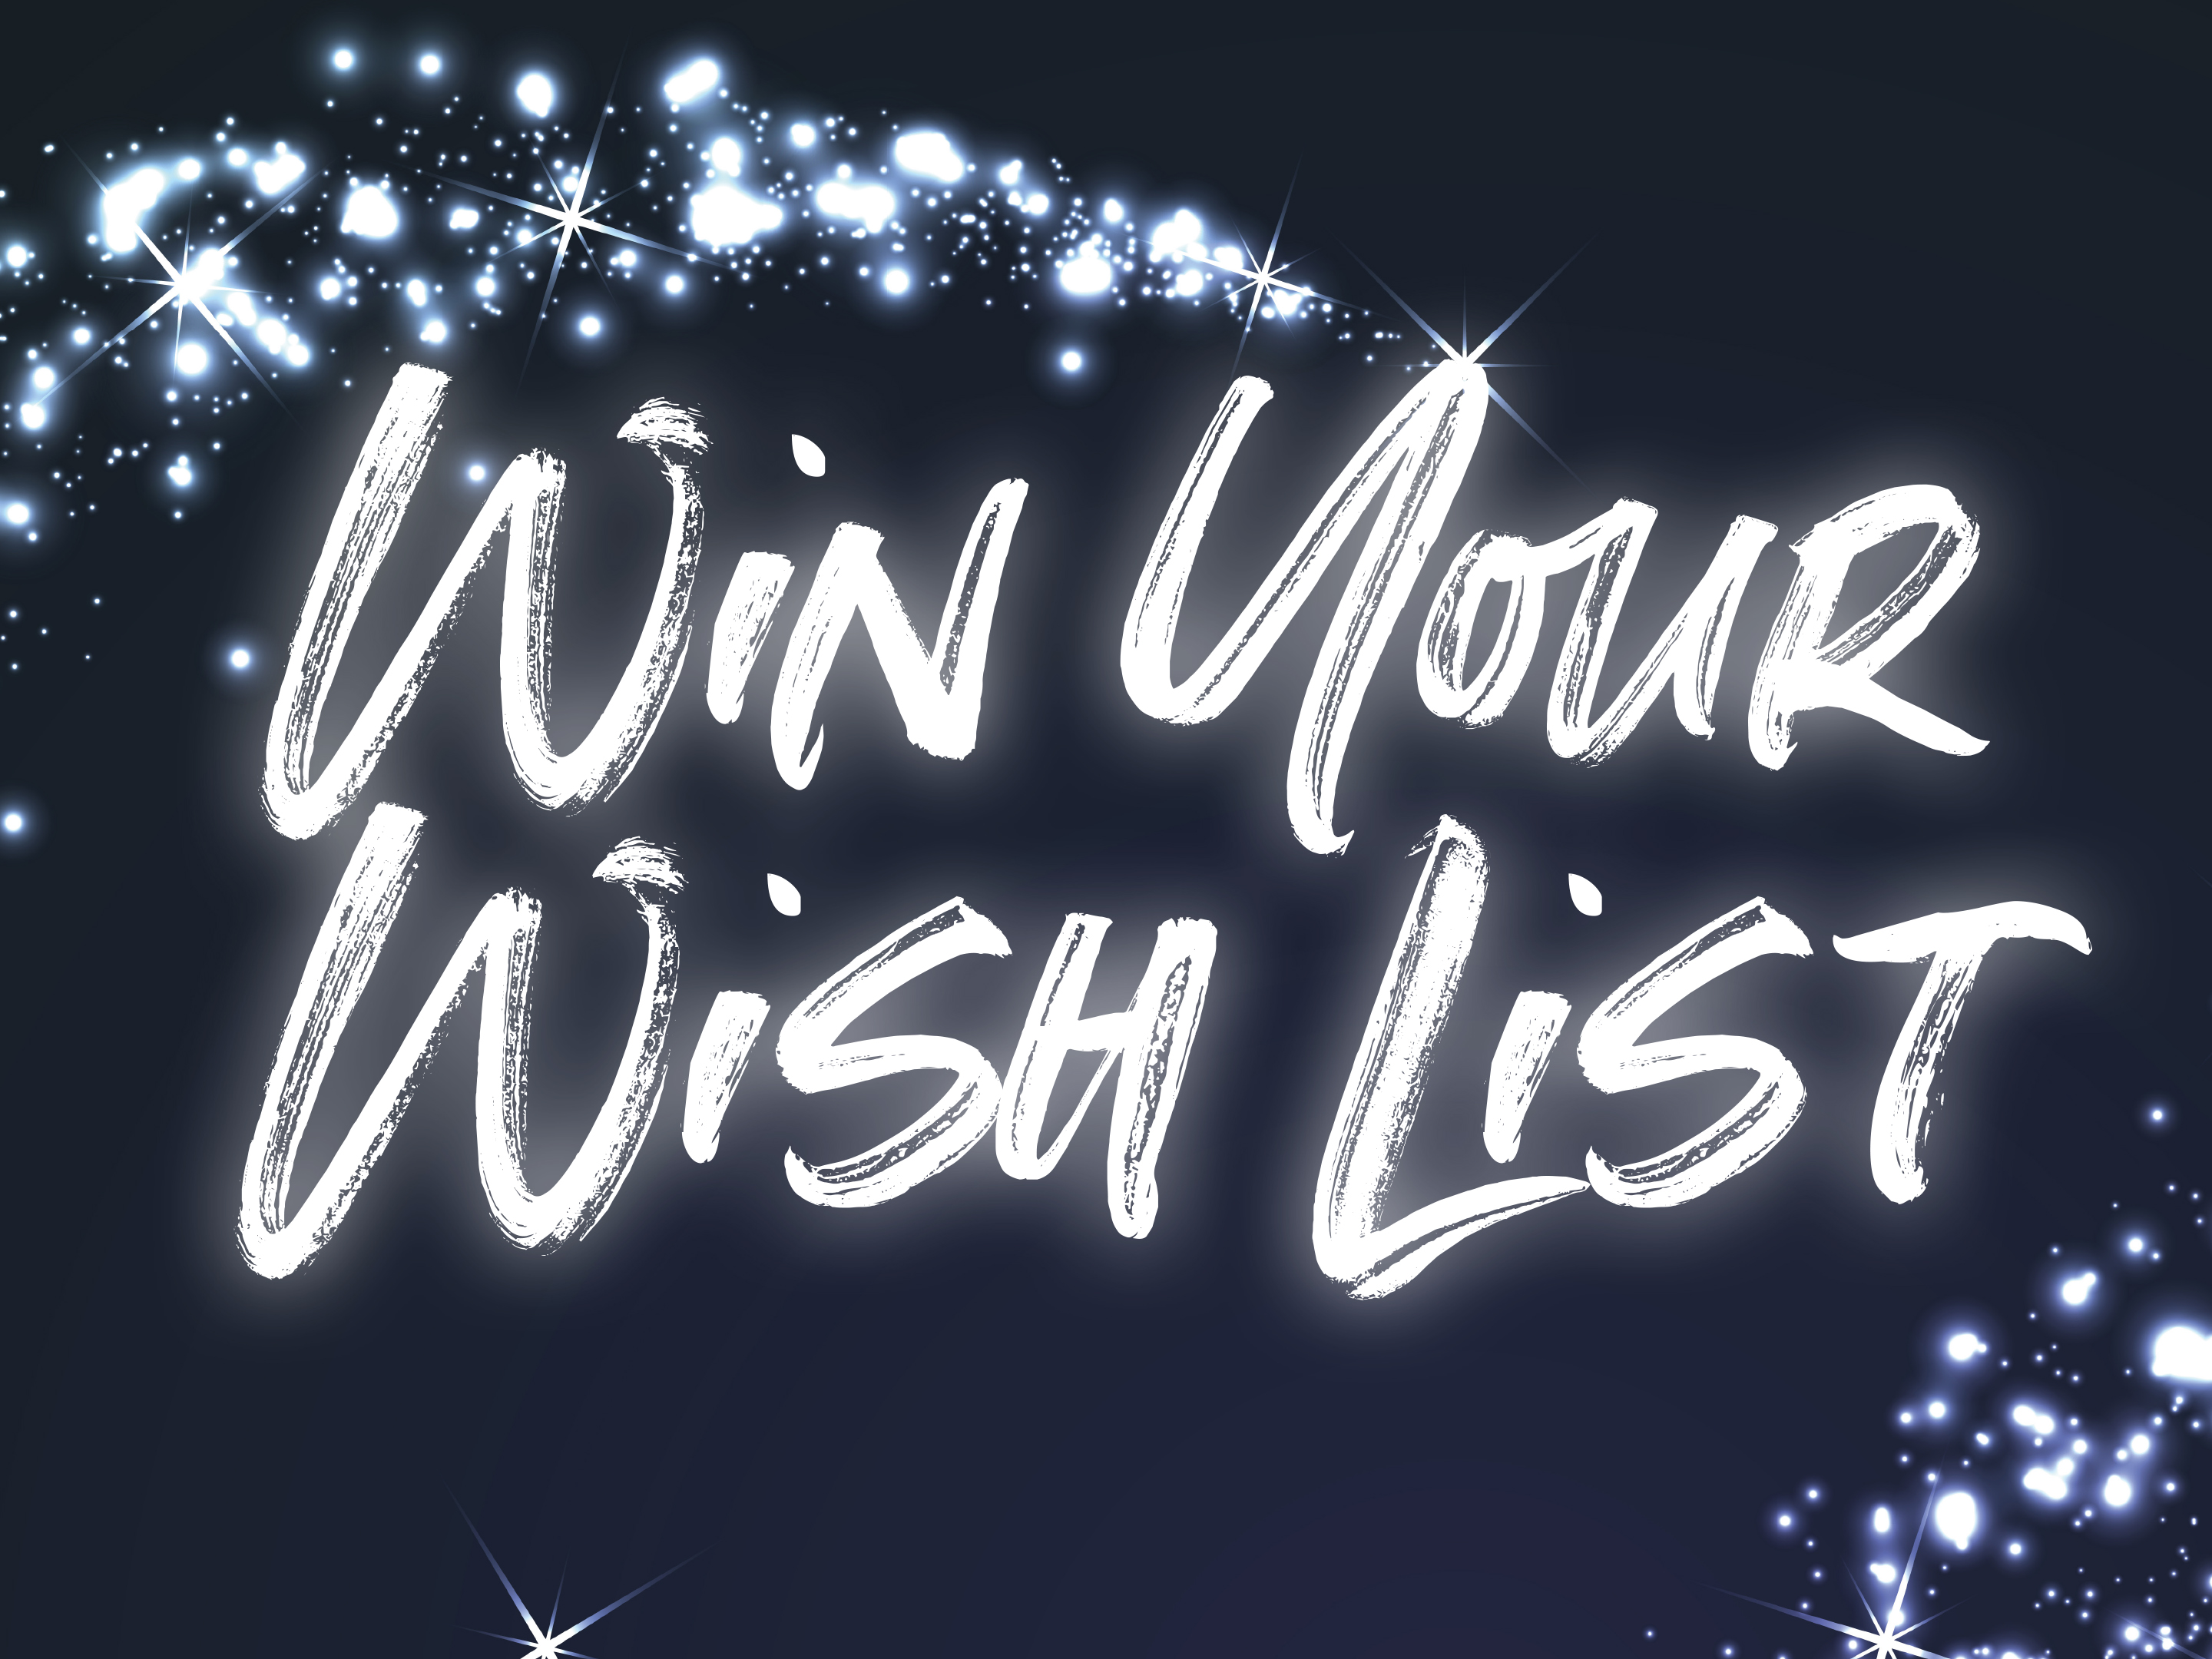 Win Your Wishlist